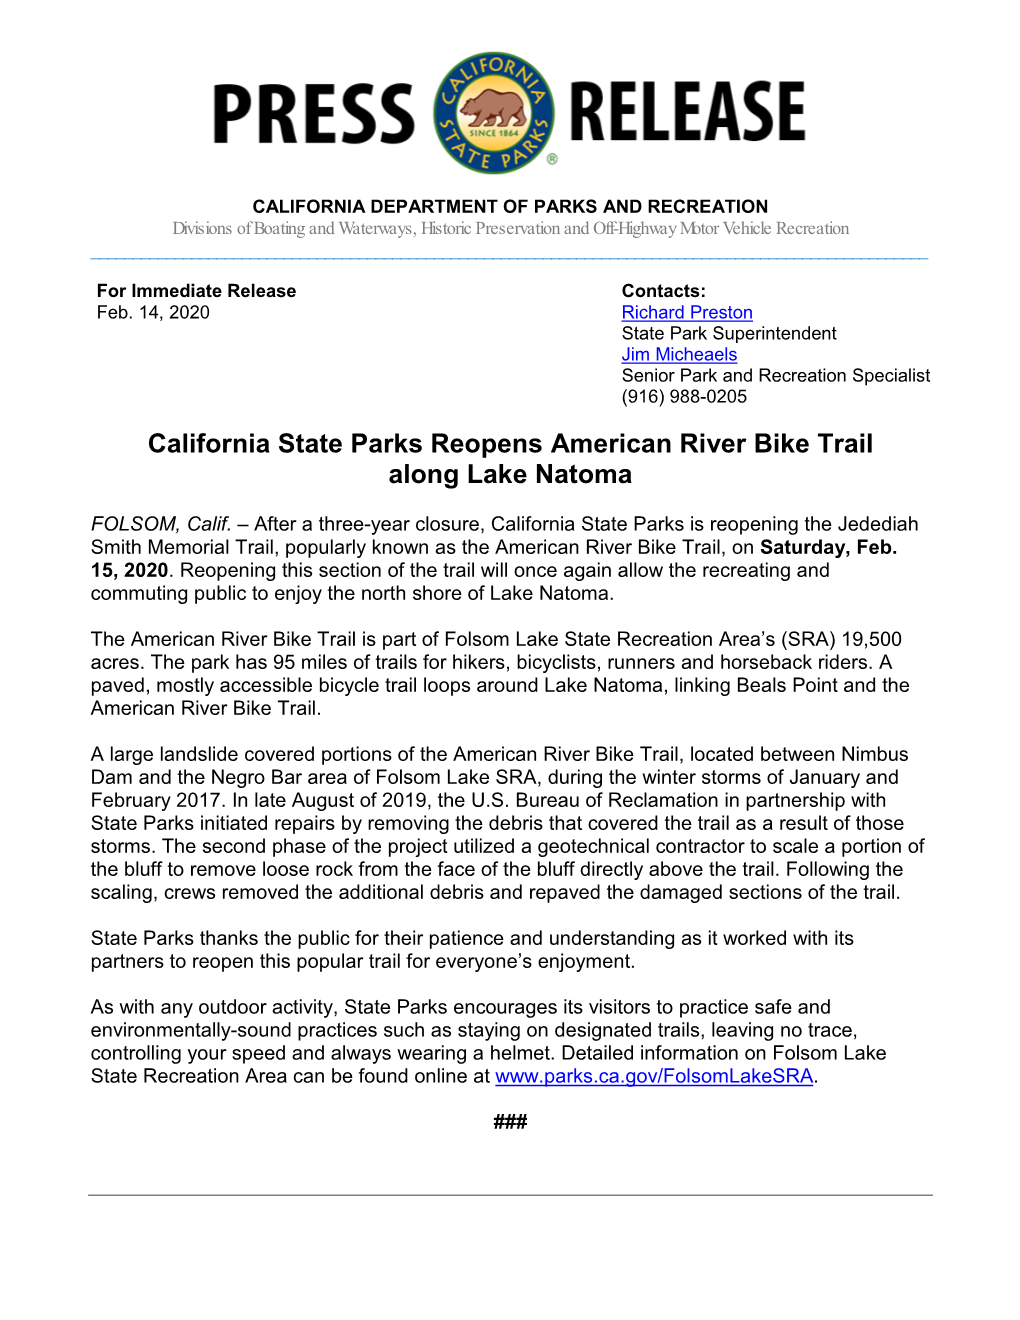 California State Parks Reopens American River Bike Trail Along Lake Natoma